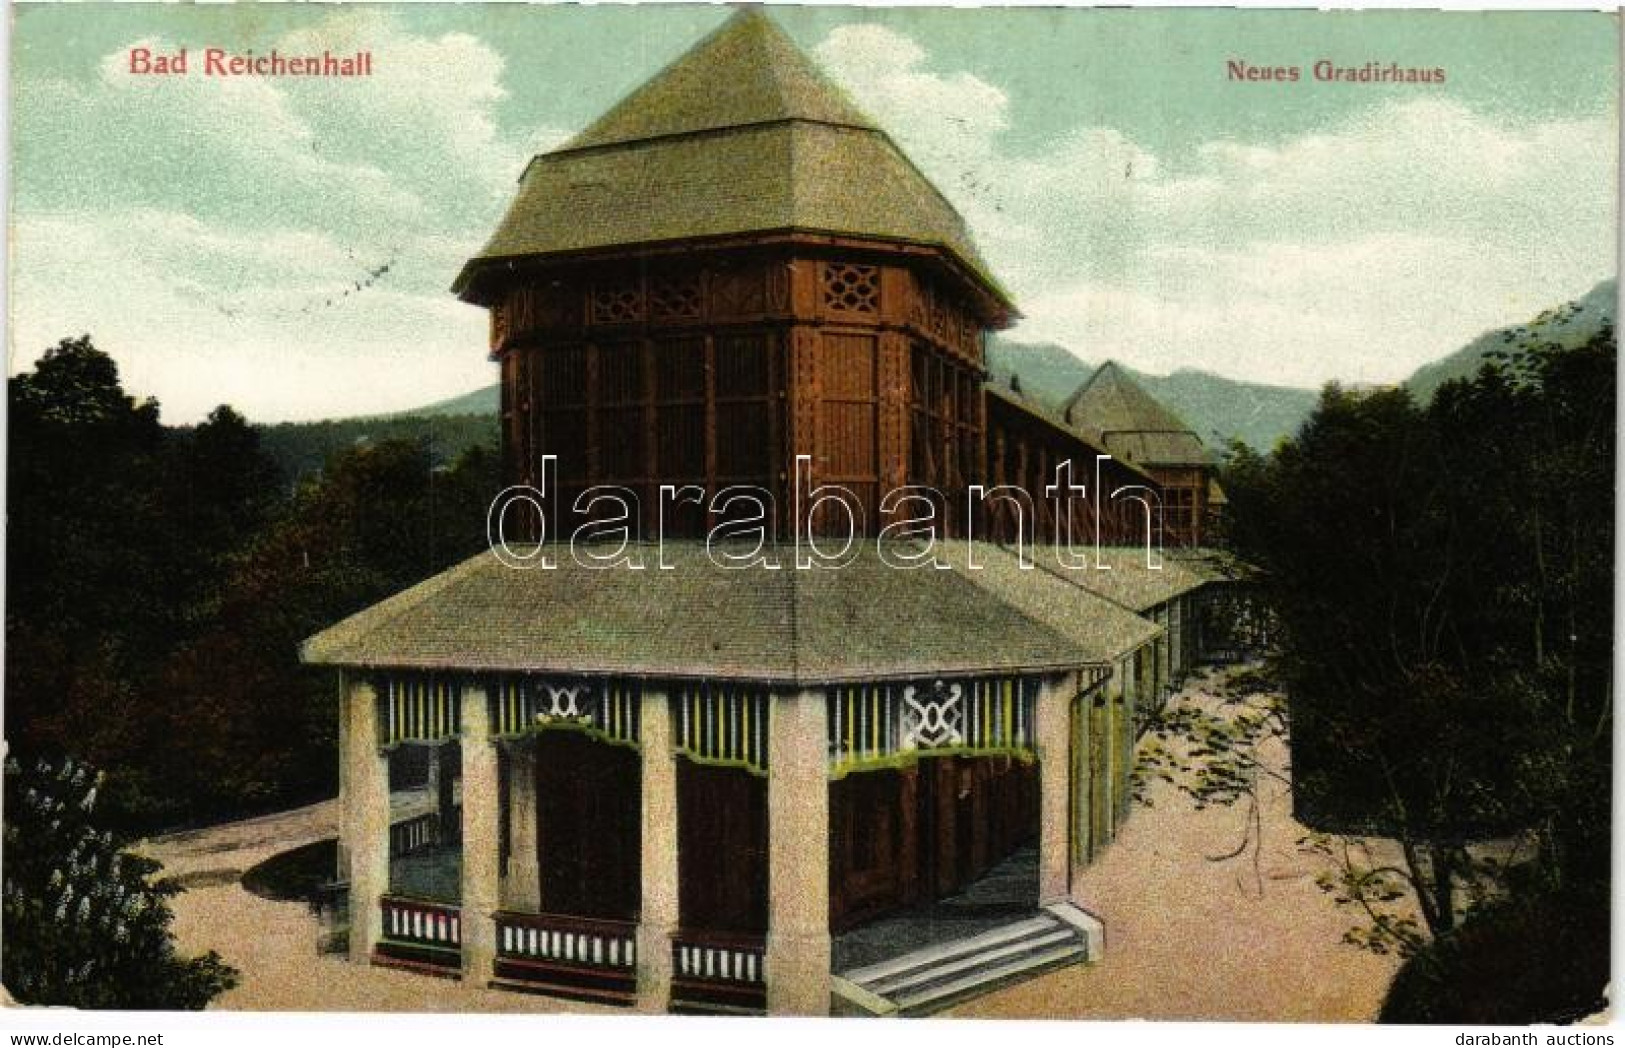 T2/T3 1910 Bad Reichenhall, Neues Gradirhaus / Spa, Bath. B. Lehrburger No. 18999. (EK) - Non Classificati